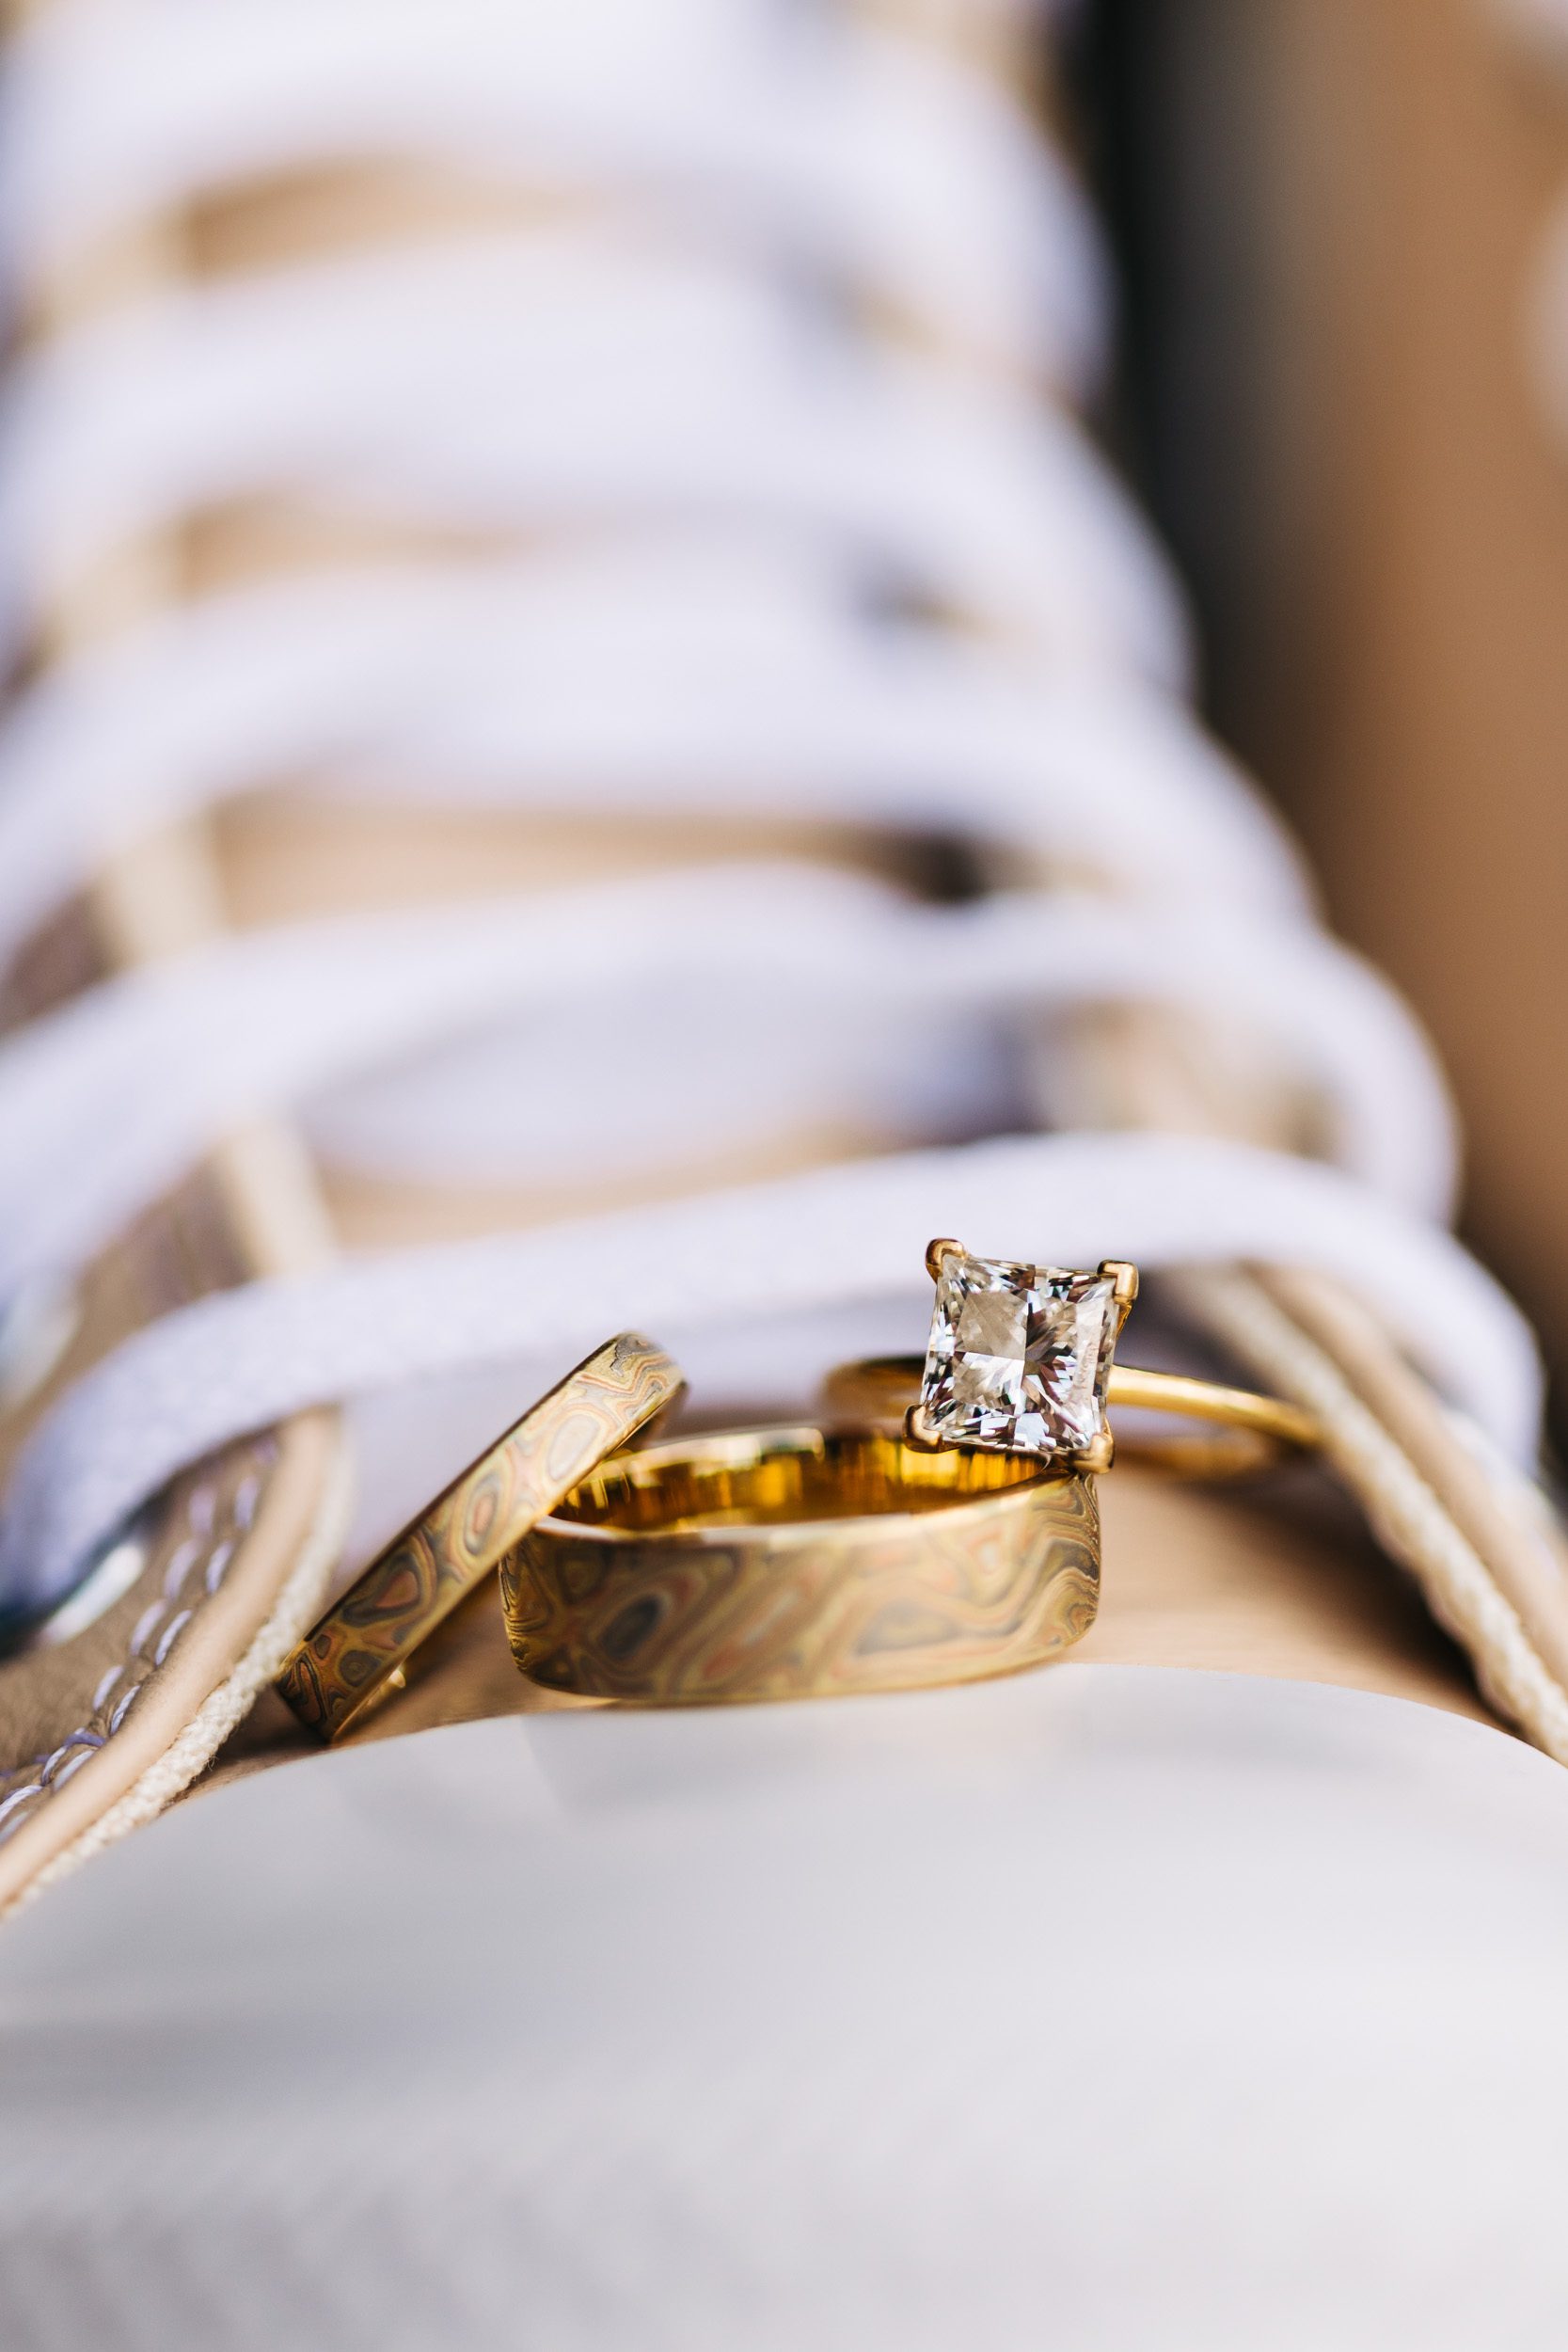 Wedding rings and custom wedding converse shoes